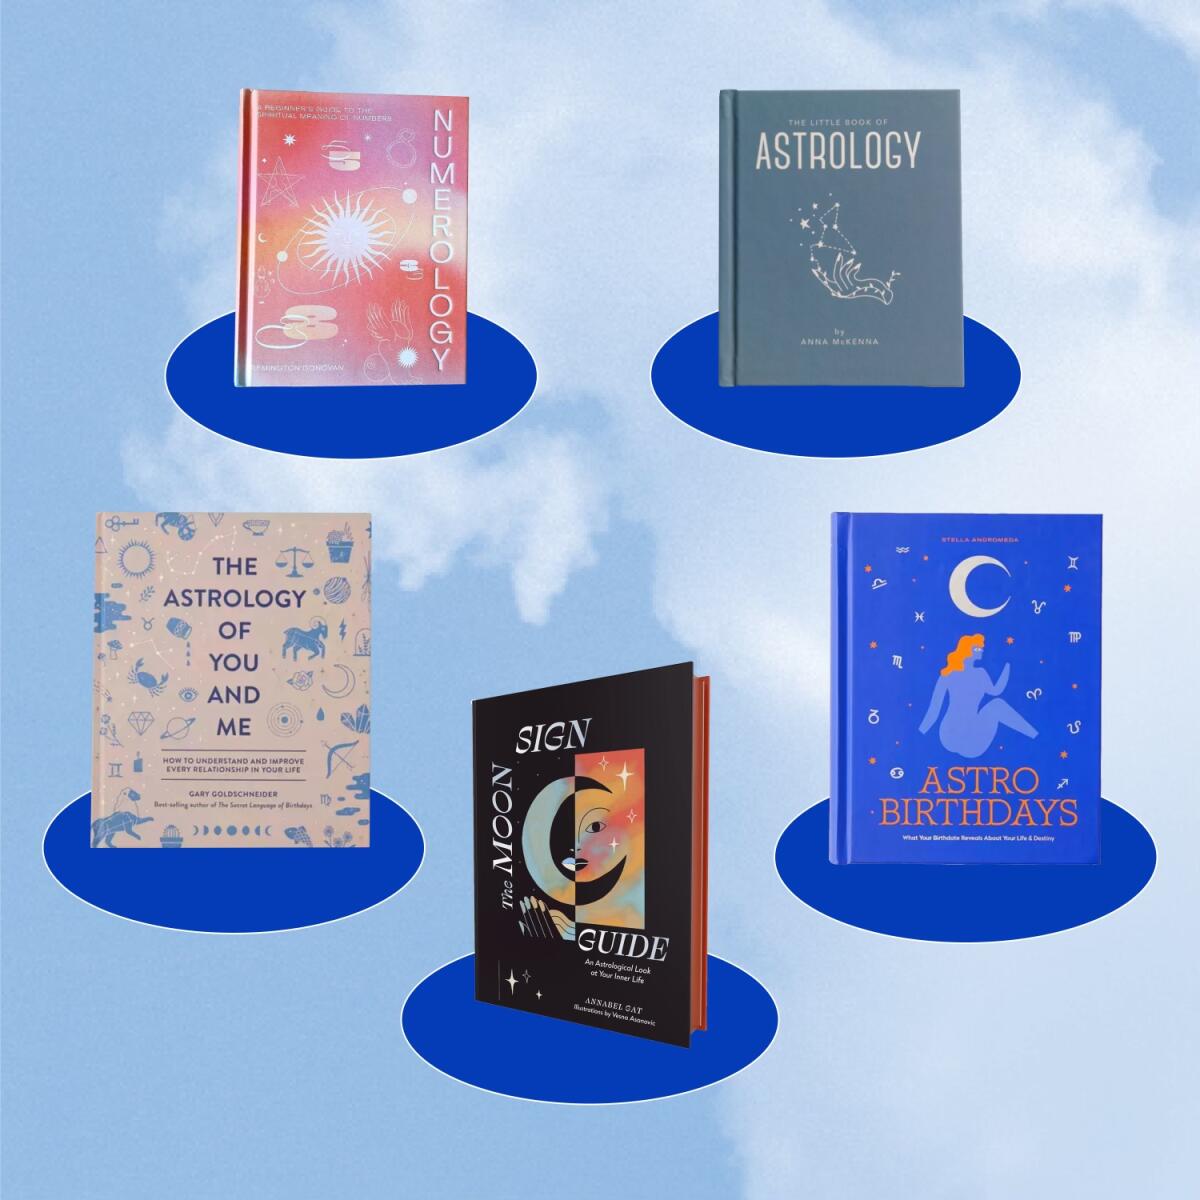 Astrology books 